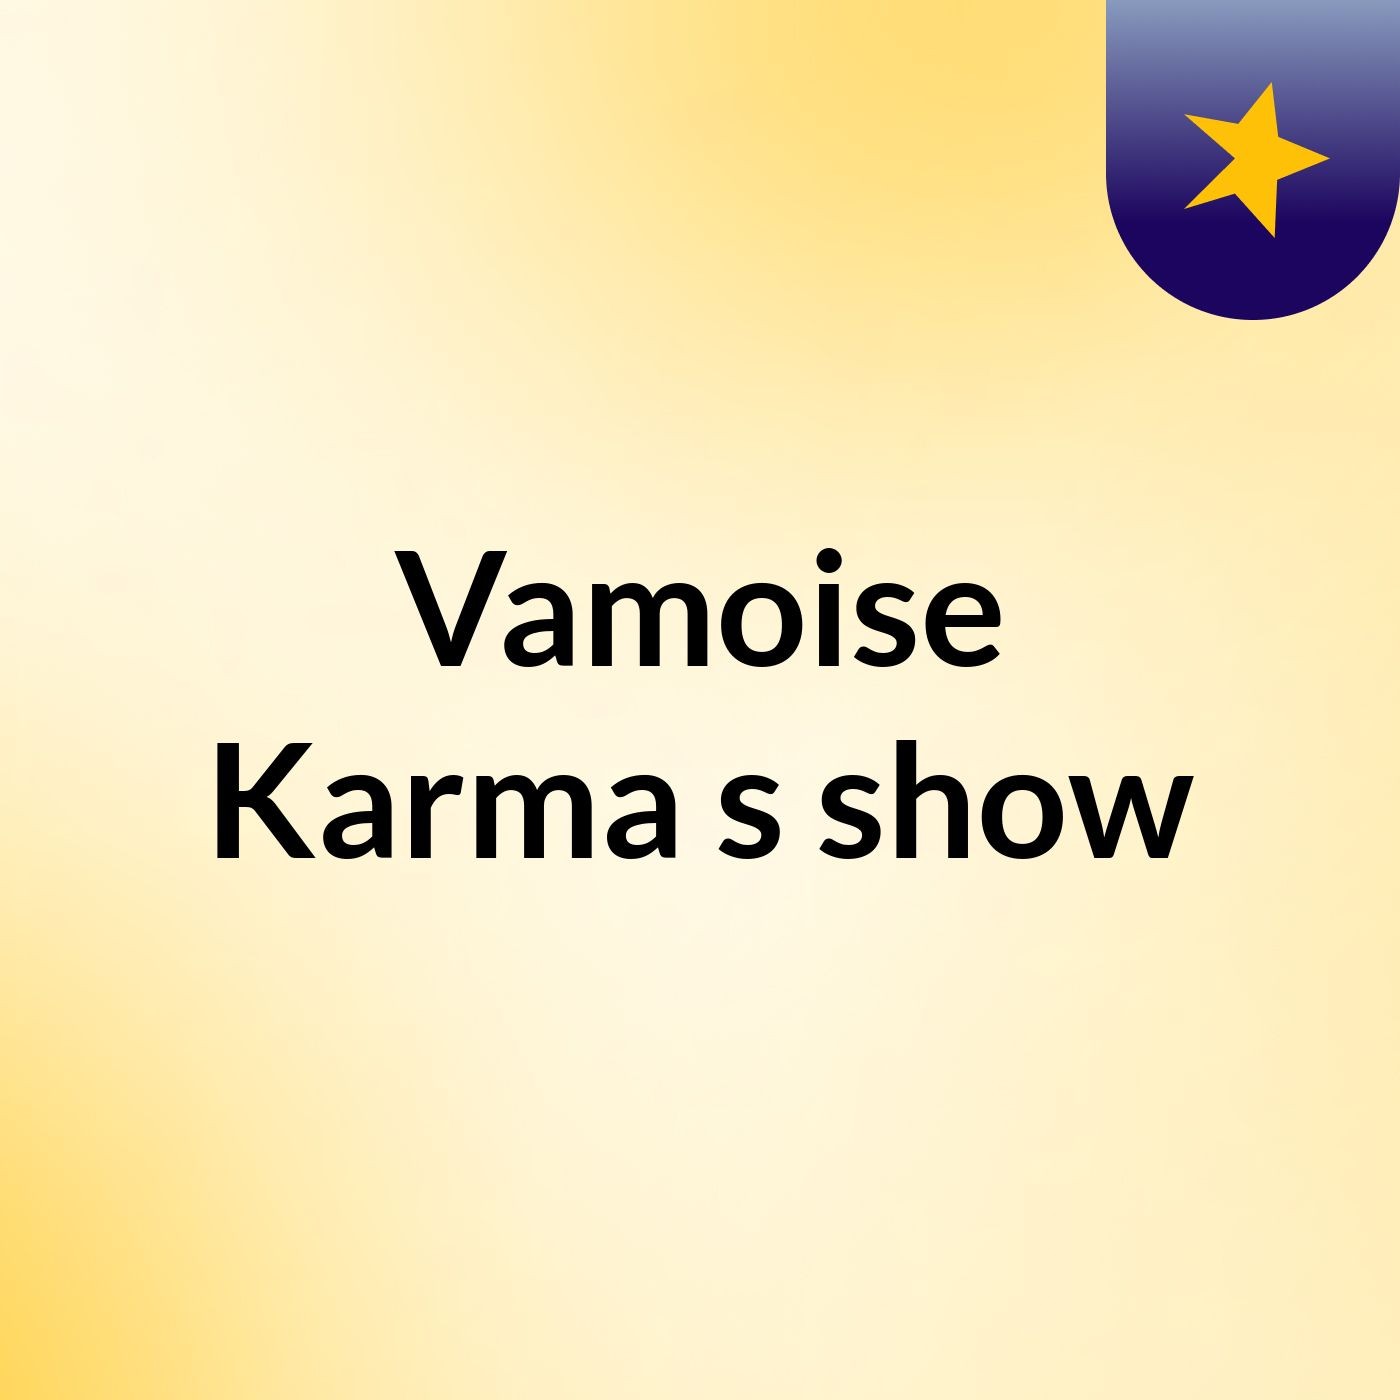 Vamoise Karma's show